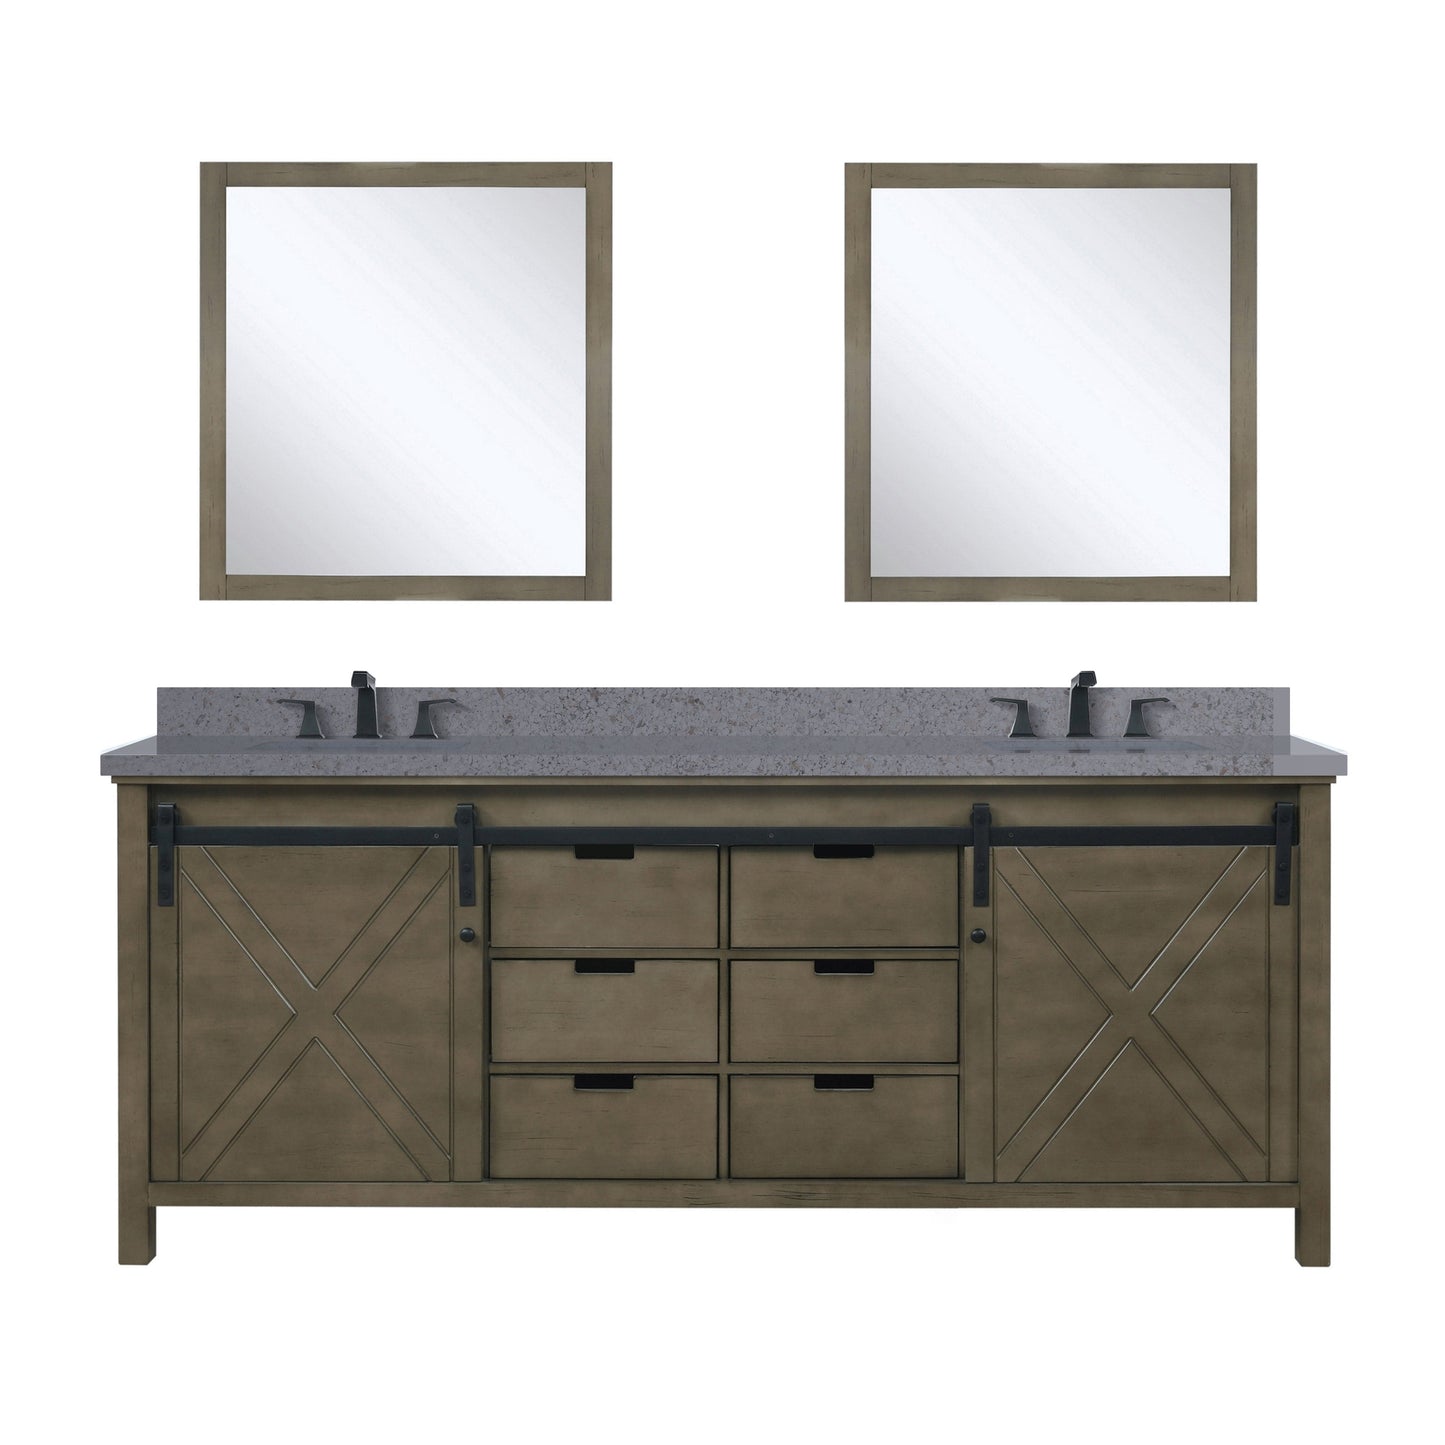 Bell + Modern Bathroom Vanity Ketchum 84" x 22" Double Bath Vanity